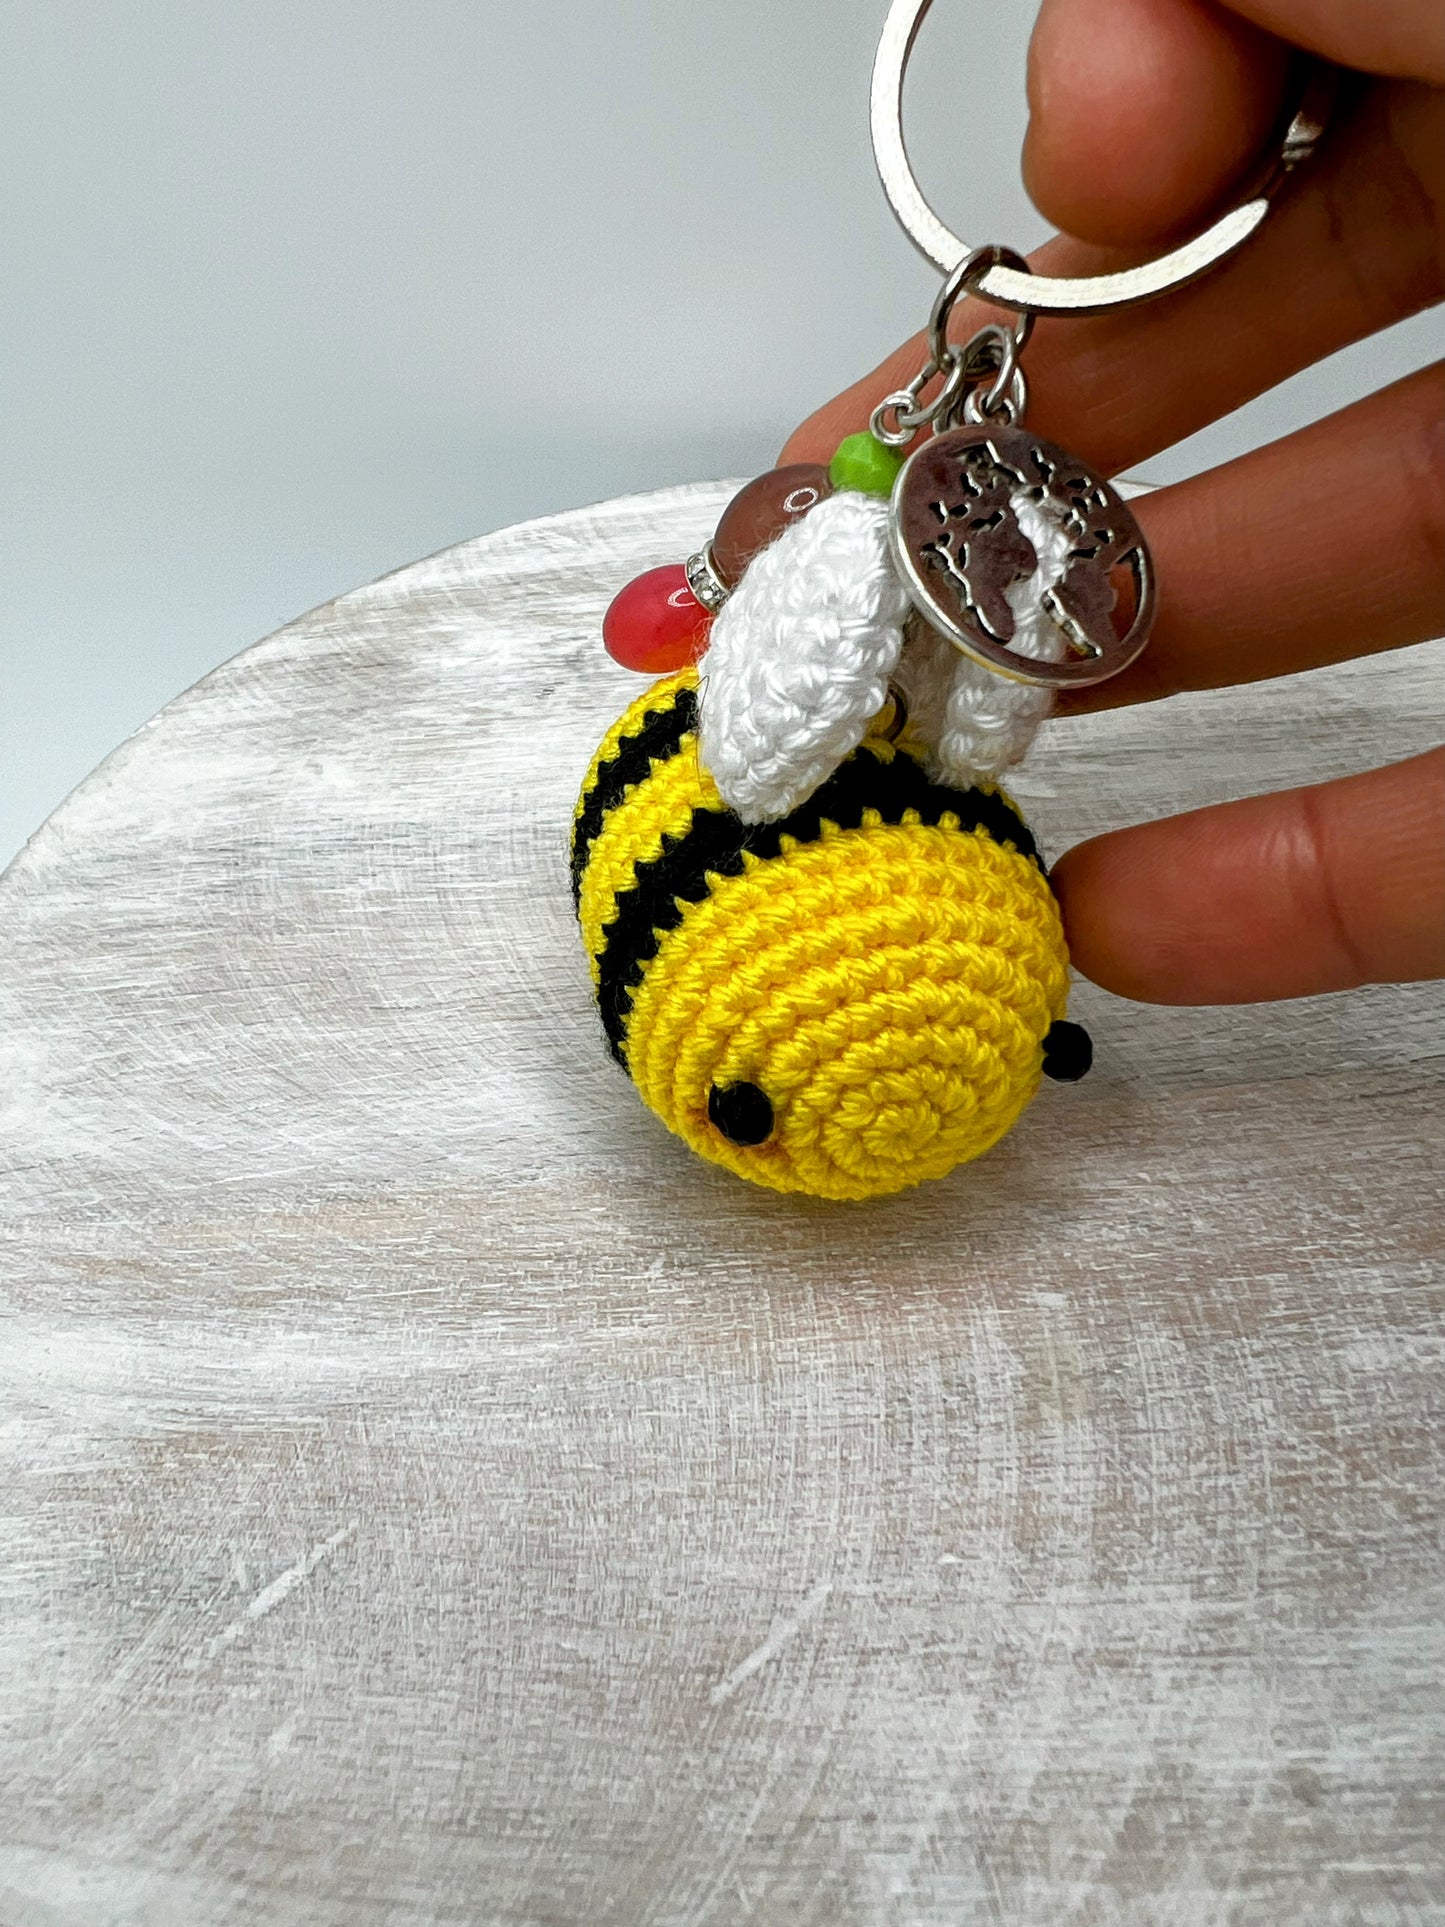 Stuffed Bee 🐝 Keychain - Crochet Knitted Amigurumi Toy